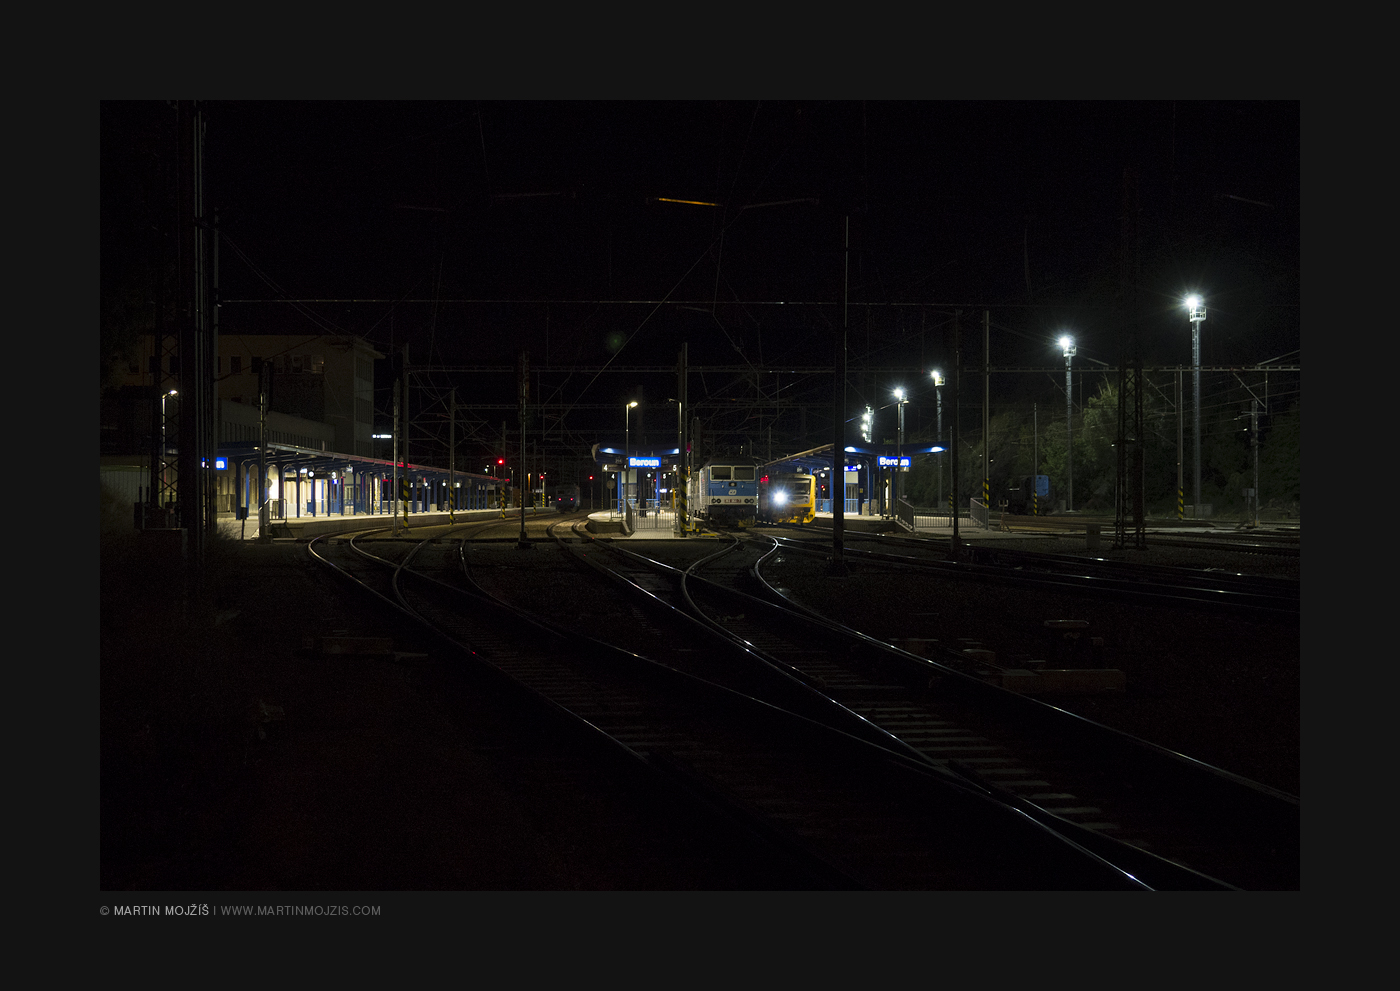 Beroun railway station at night.